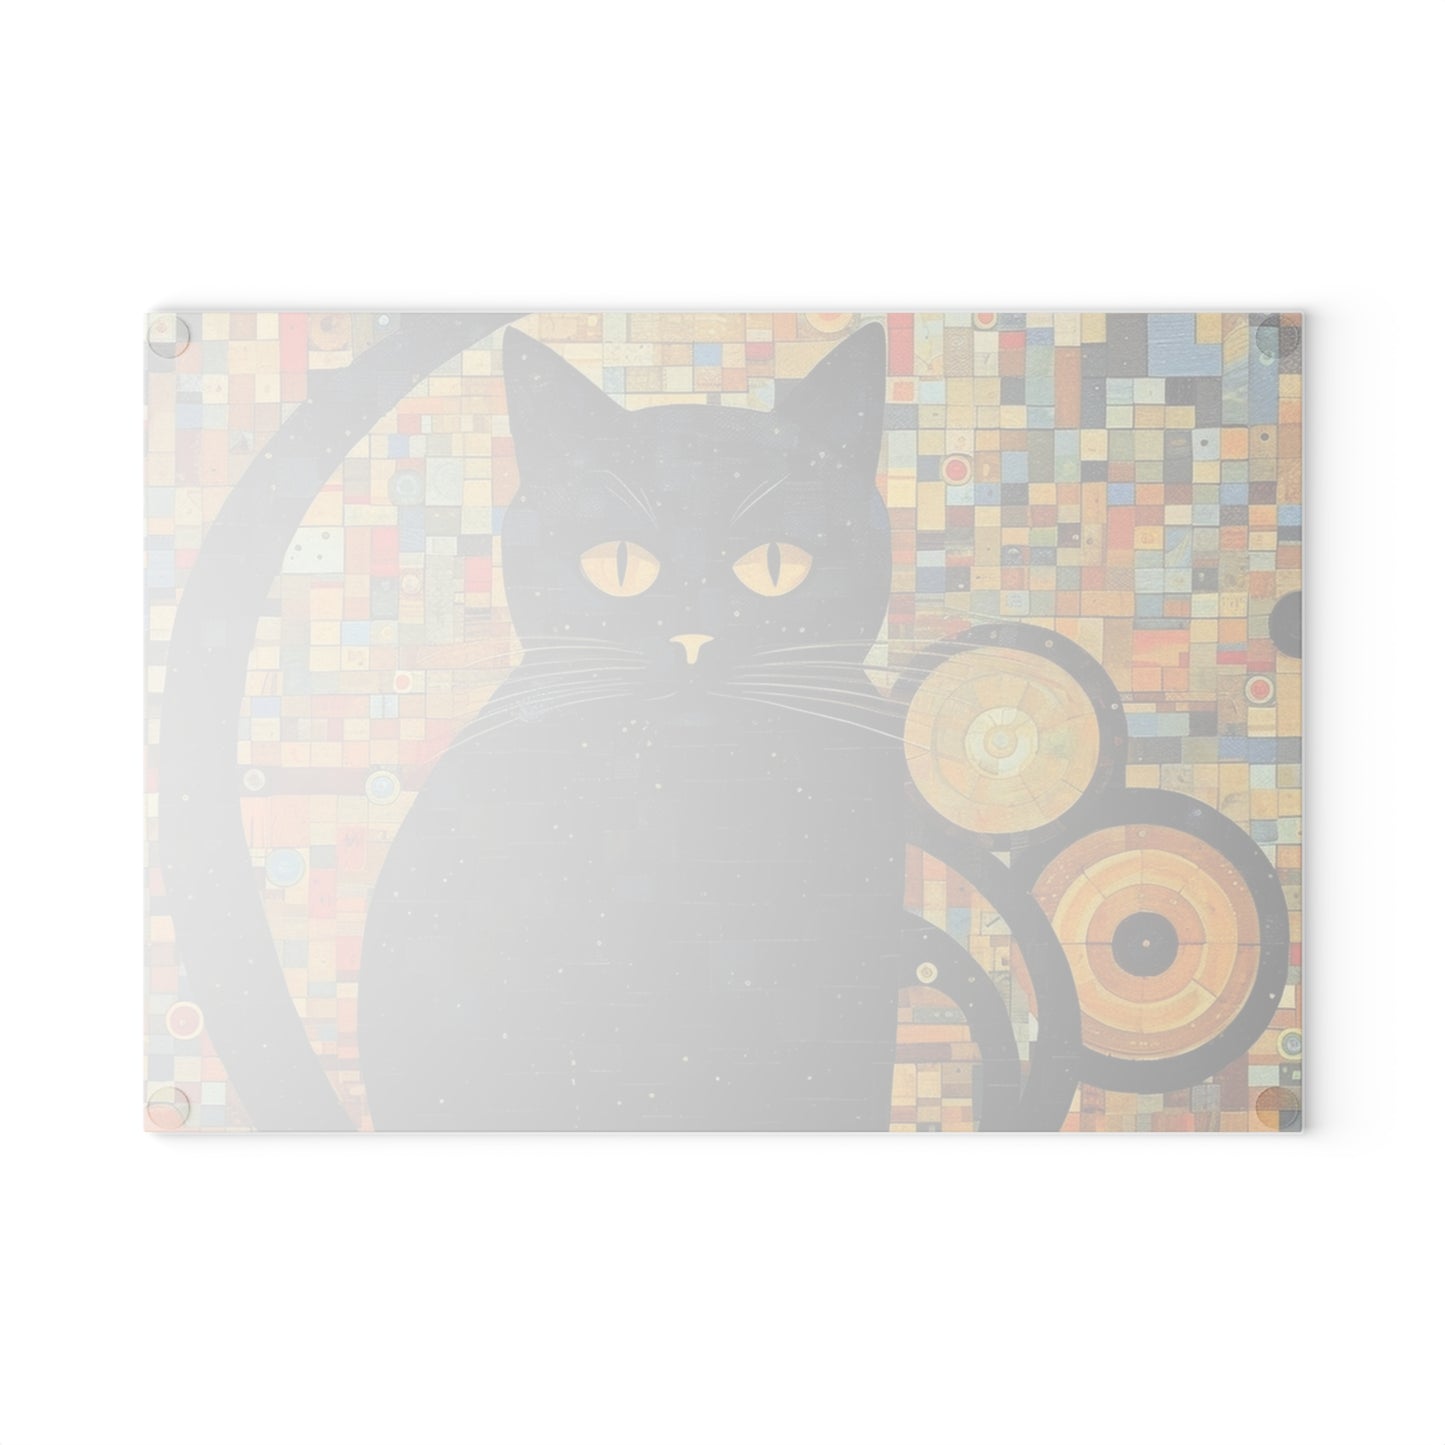 Gustav Klimt Cat Glass Cutting Board: Embrace Feline Beauty and Artistic Splendor